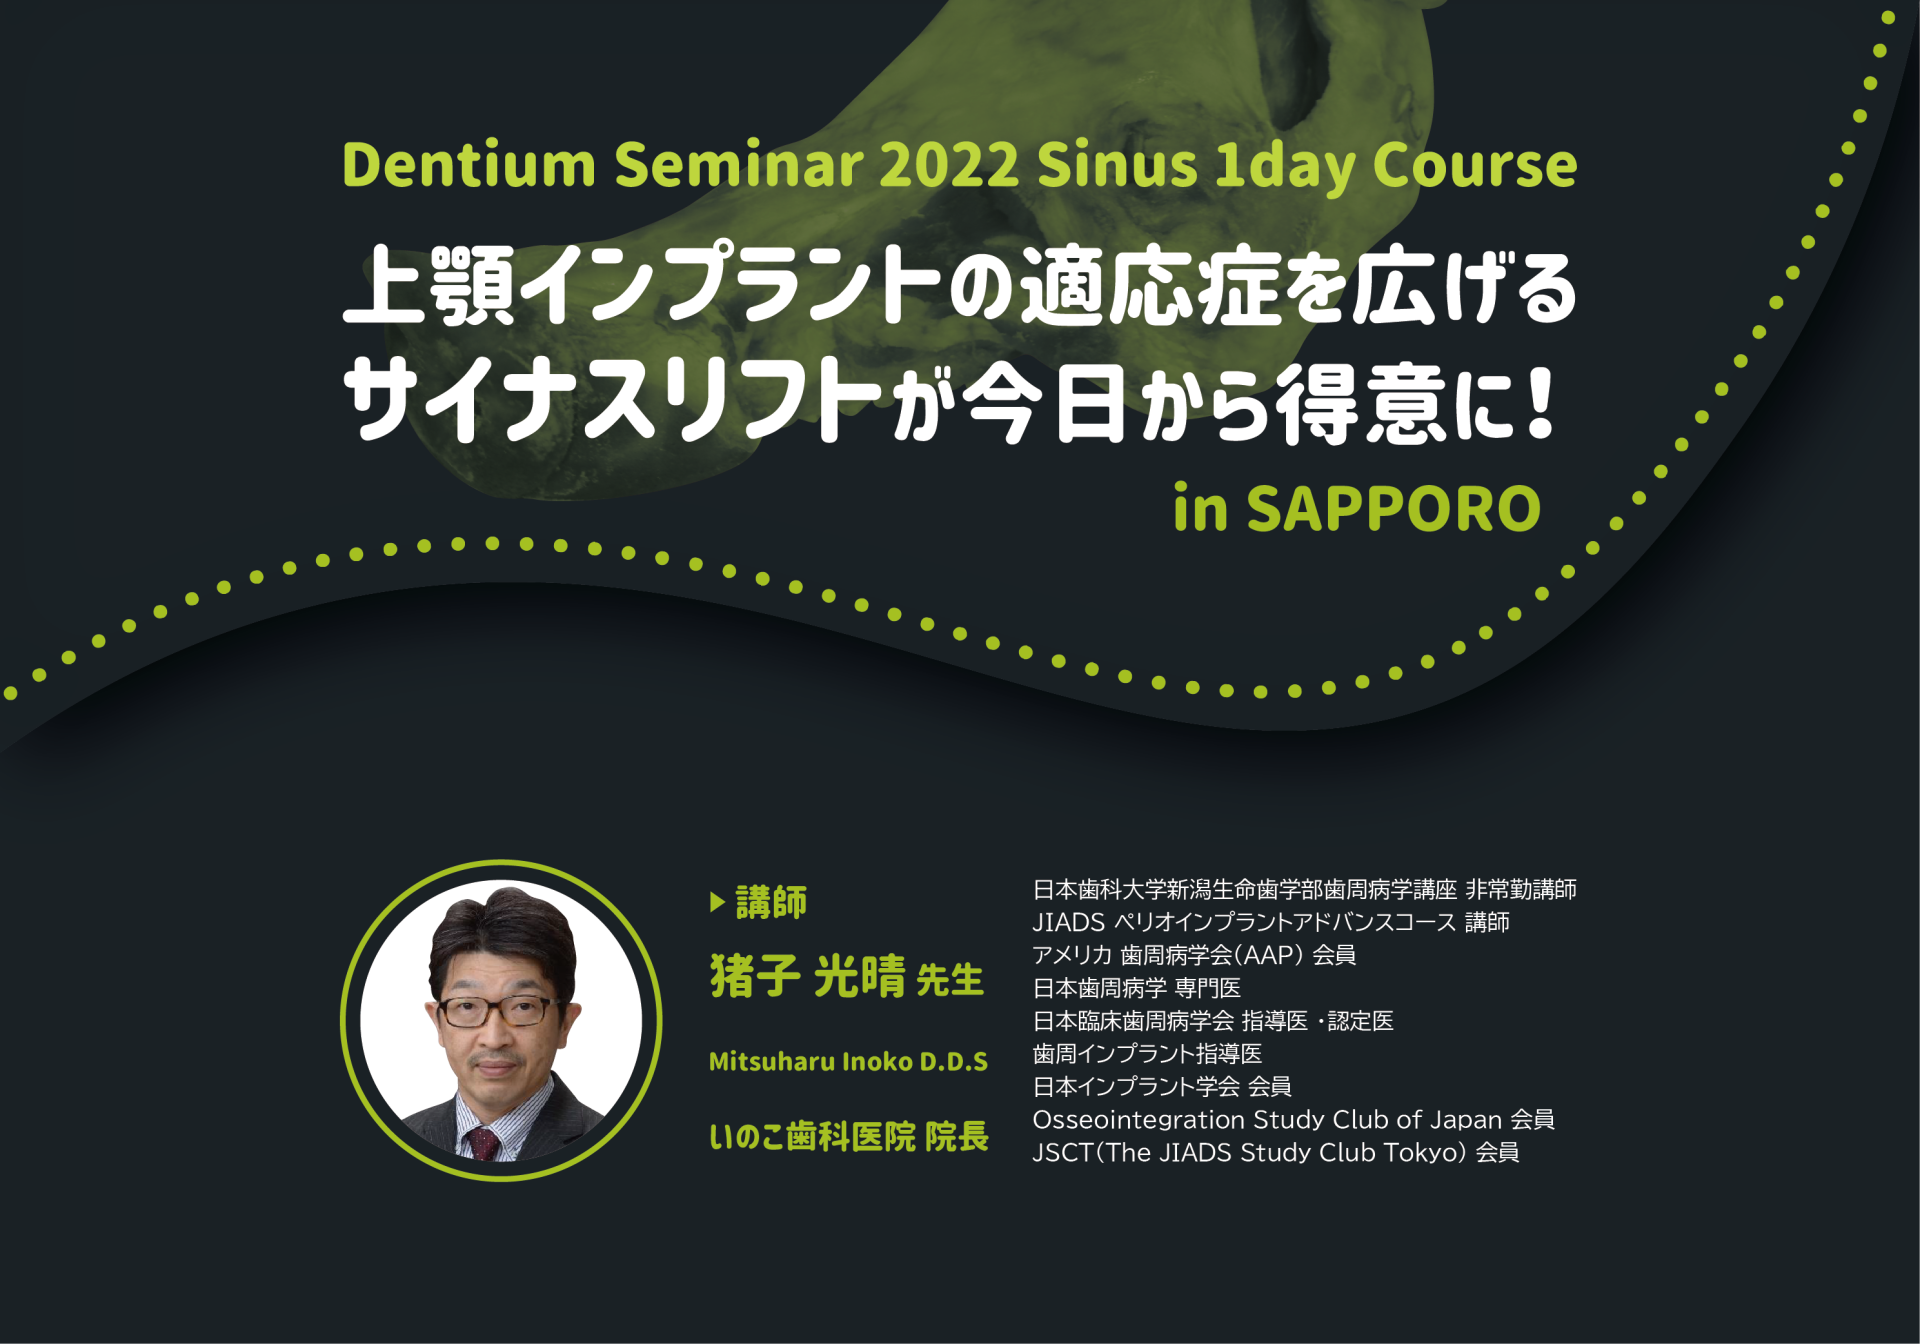 2022 Sinus 1day Course in Sapporo